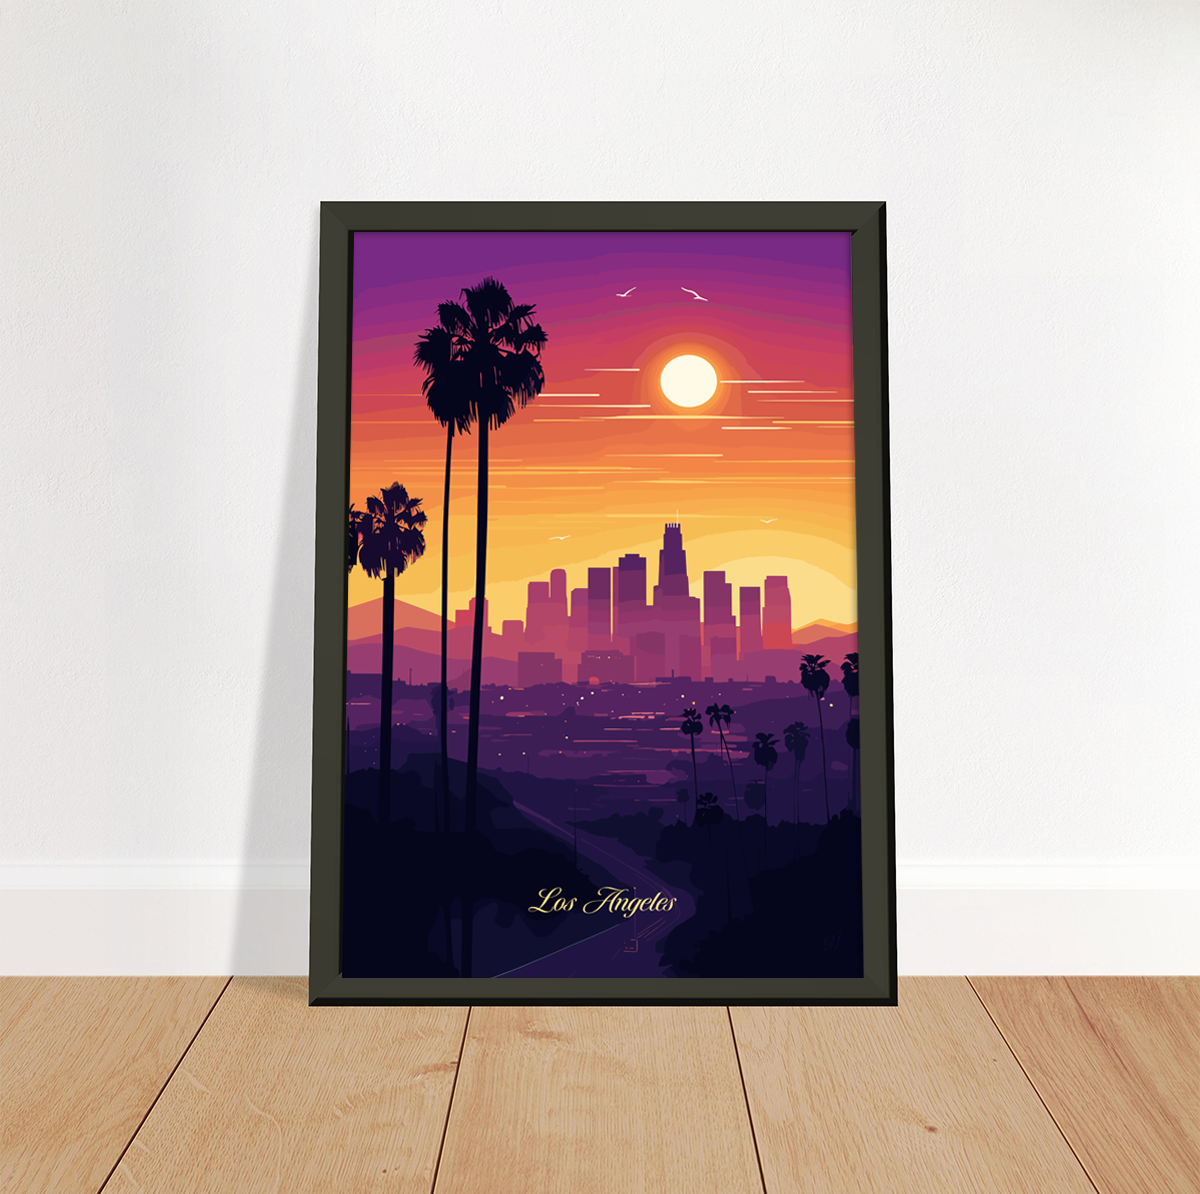 Los Angeles poster by bon voyage design